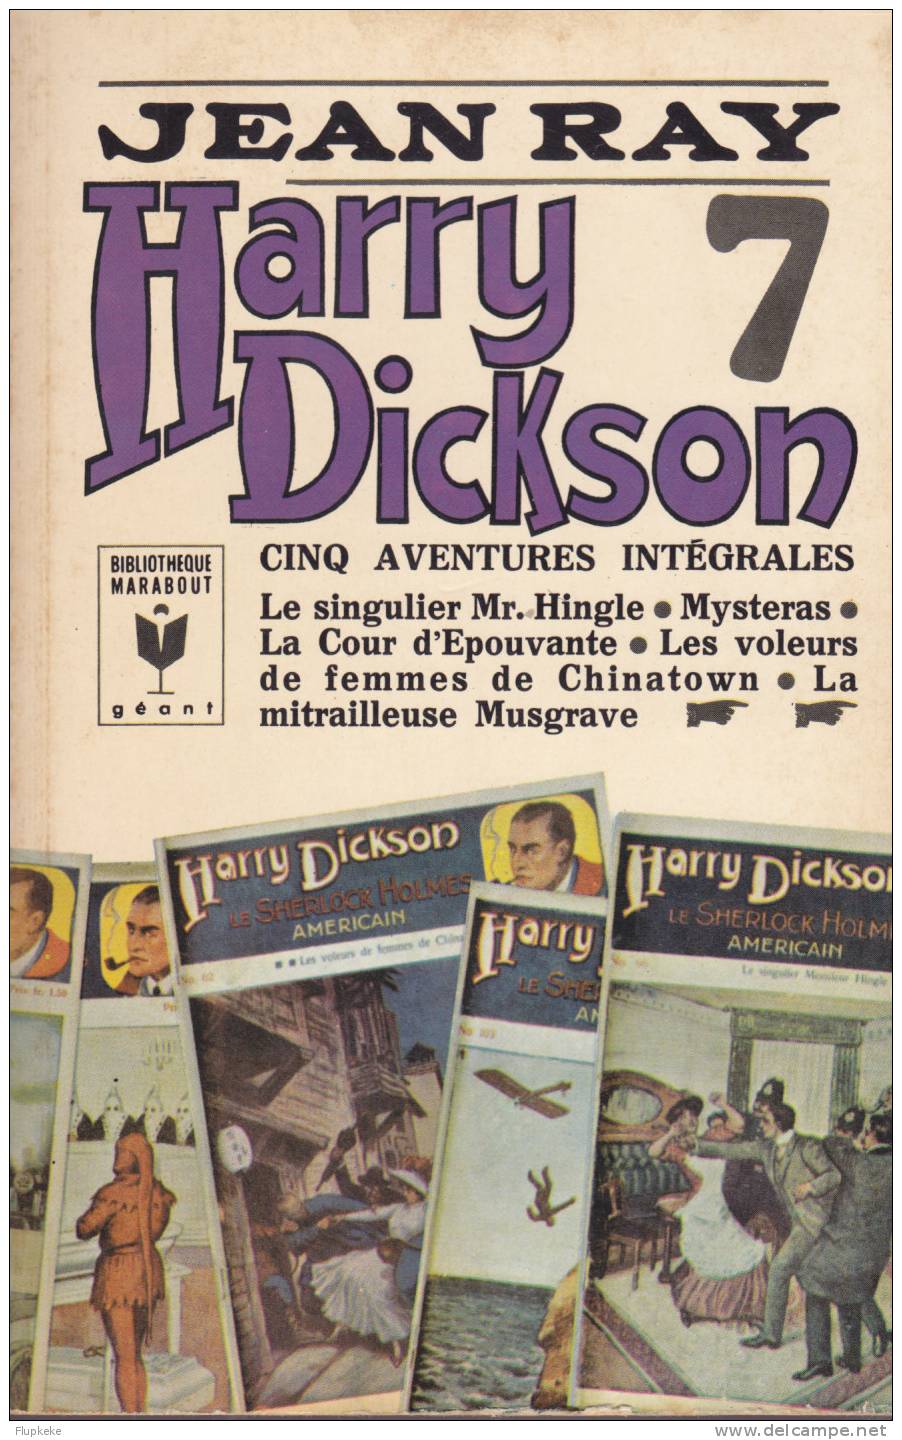 Bibliothèque Marabout 300 Harry Dickson 07 Jean Ray 1968 - Belgian Authors